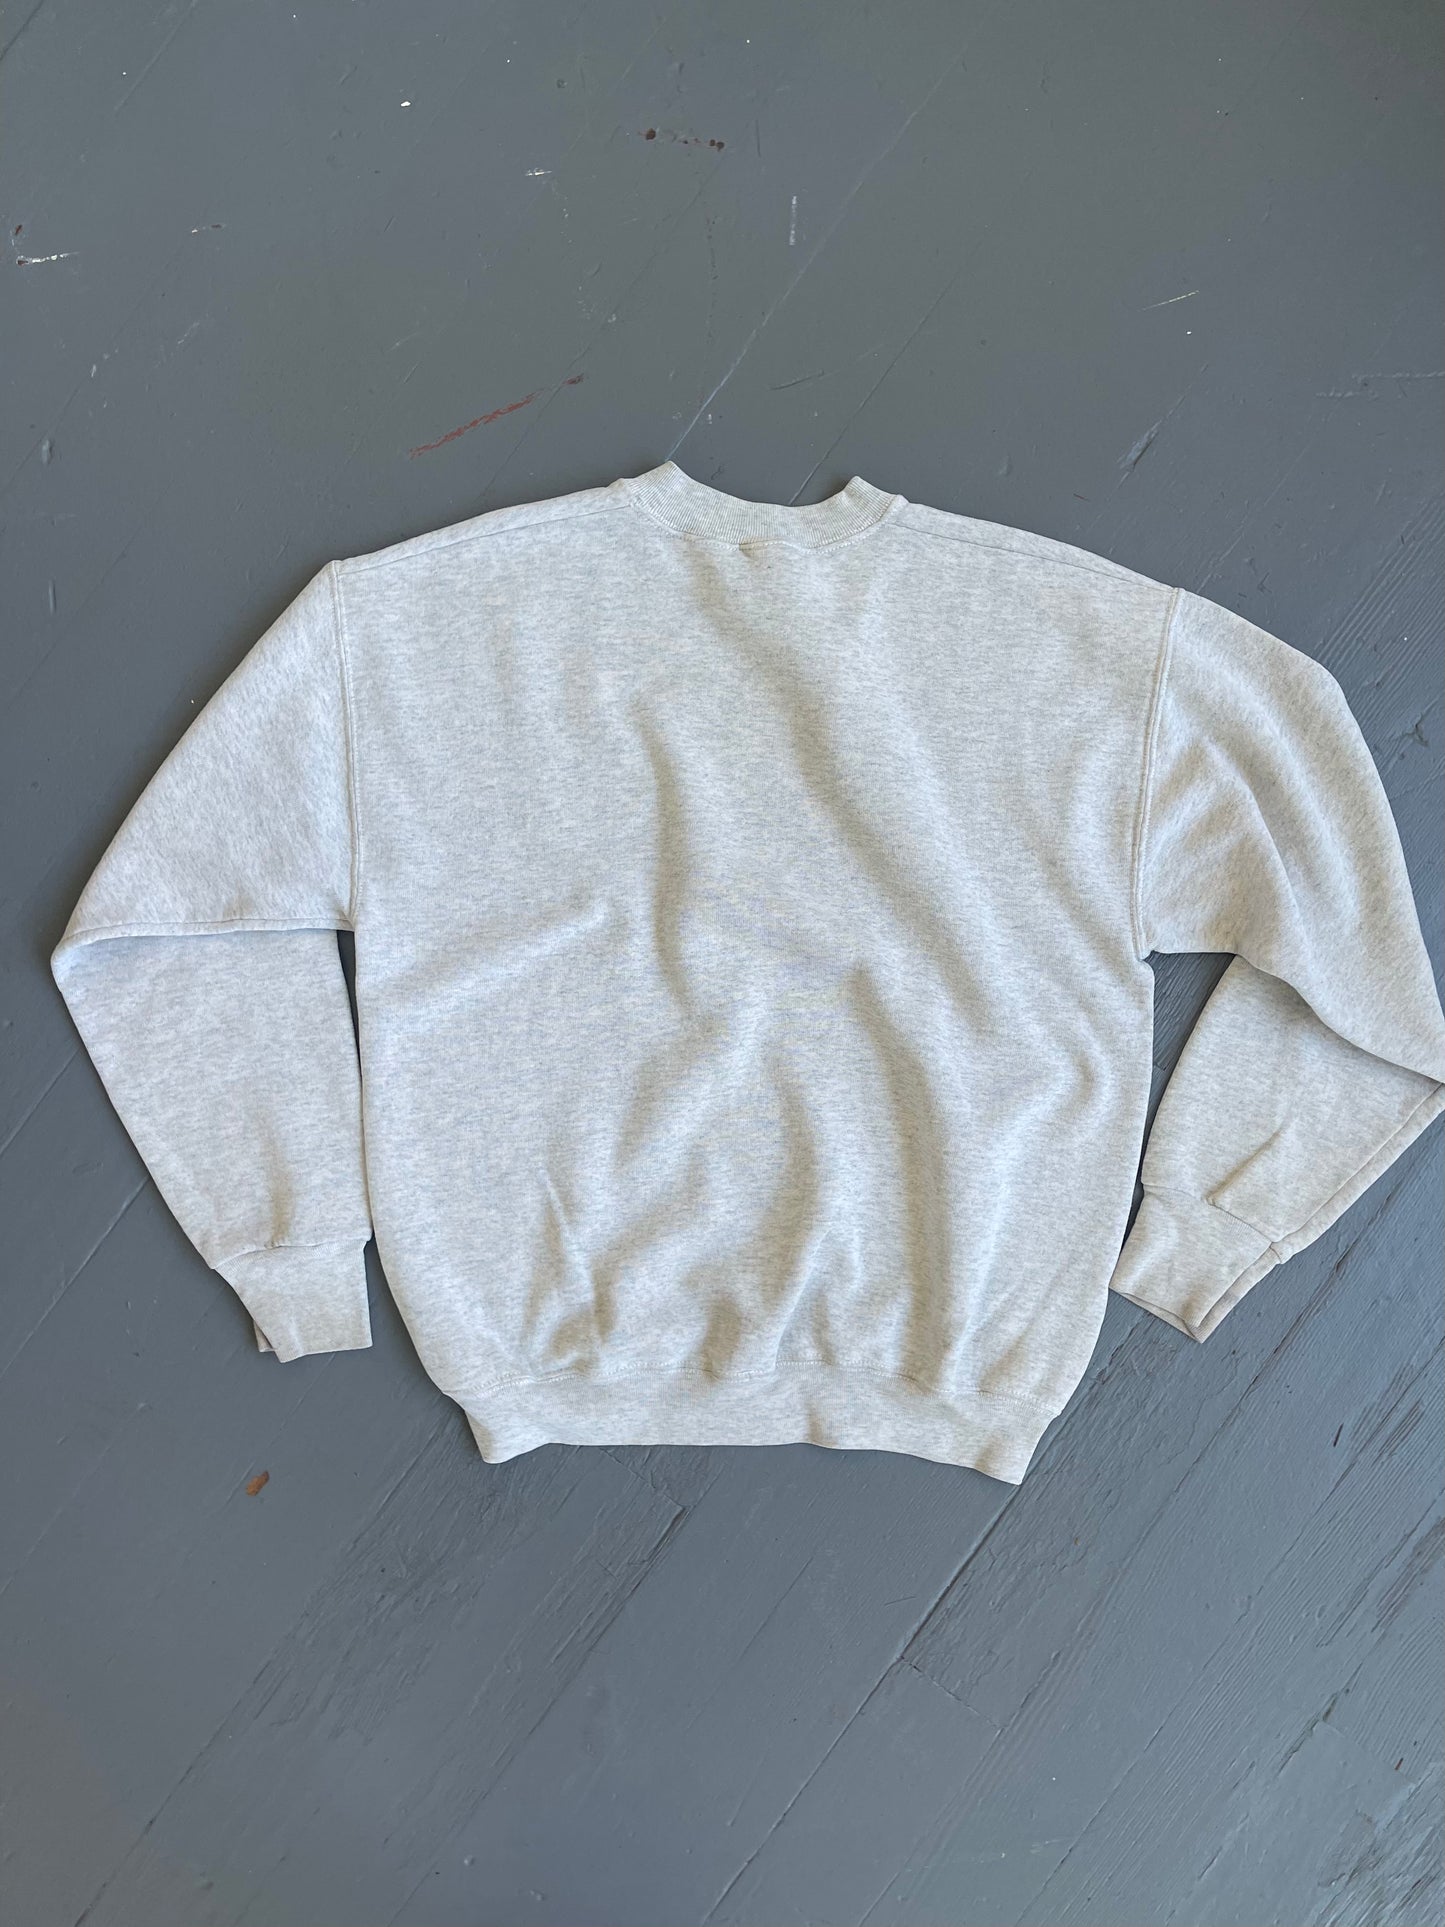 Vintage 90s Princeton Crewneck Sweatshirt - M/L